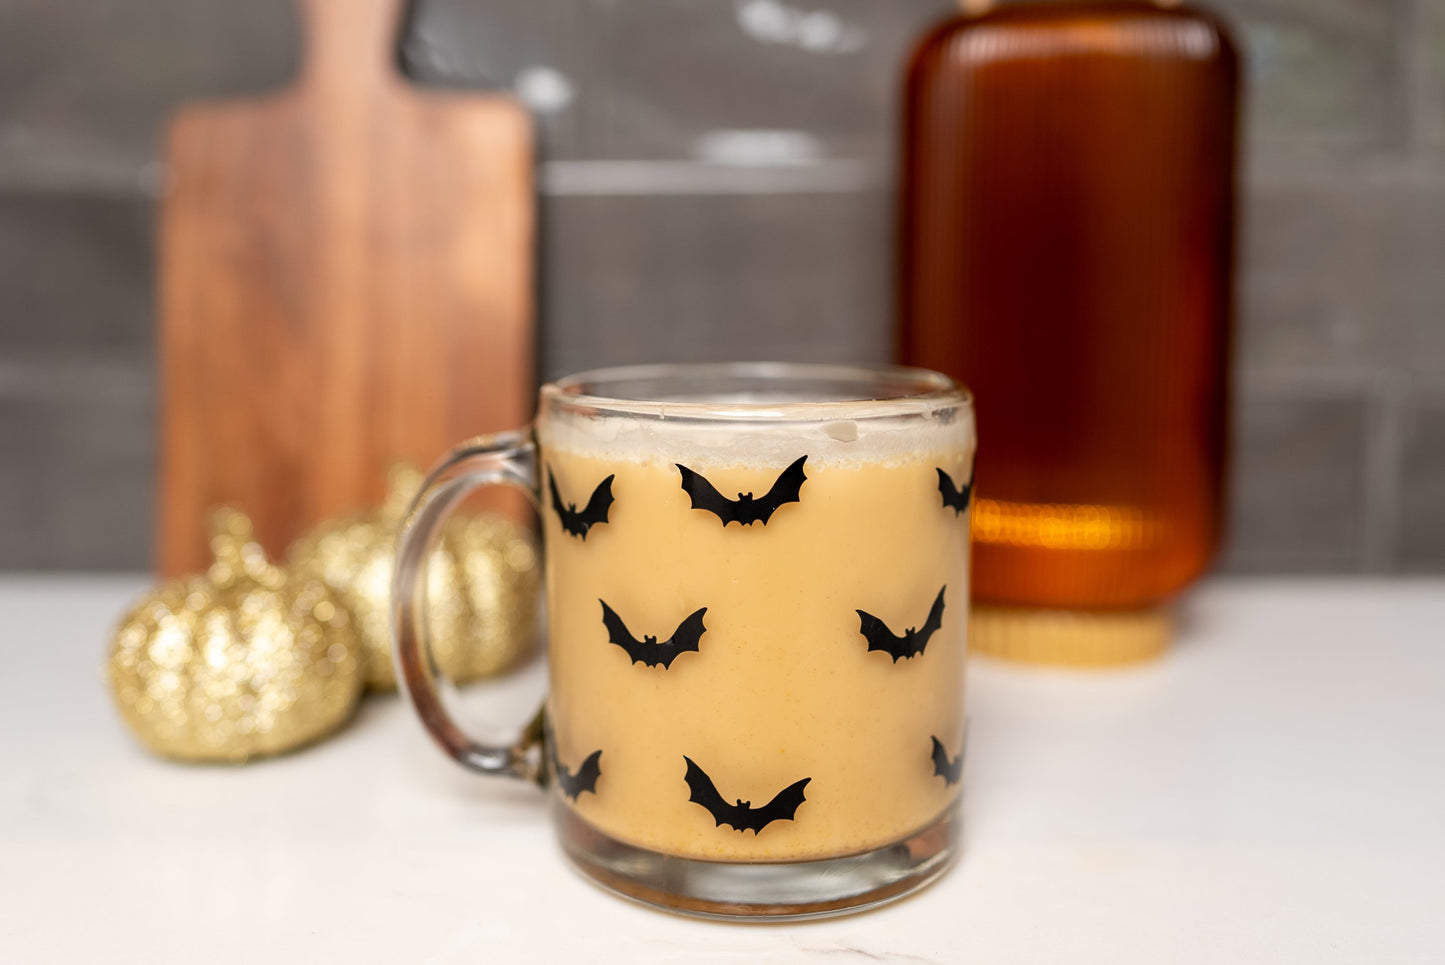 Let's Get Spooky Halloween Glass Mug